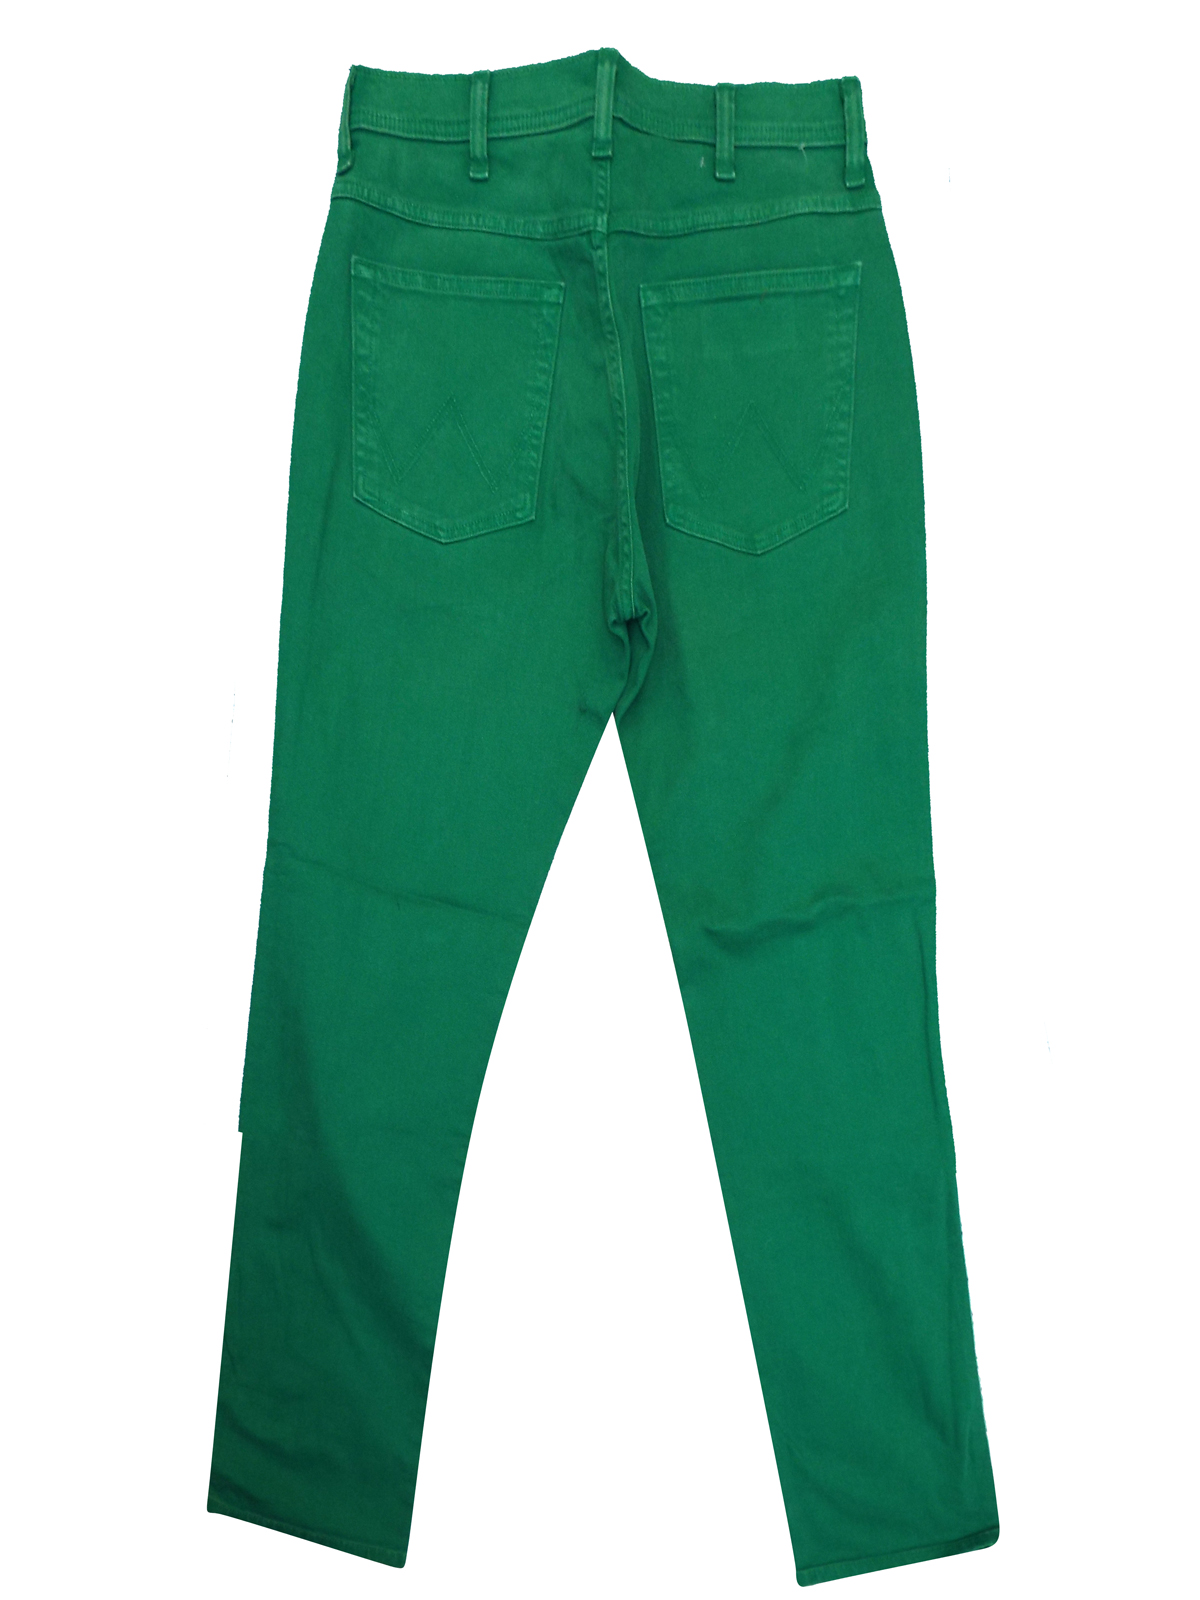 Wrangler - - Wr4ngler ASSORTED Pure Cotton Denim Jeans - Waist Size 32 ...